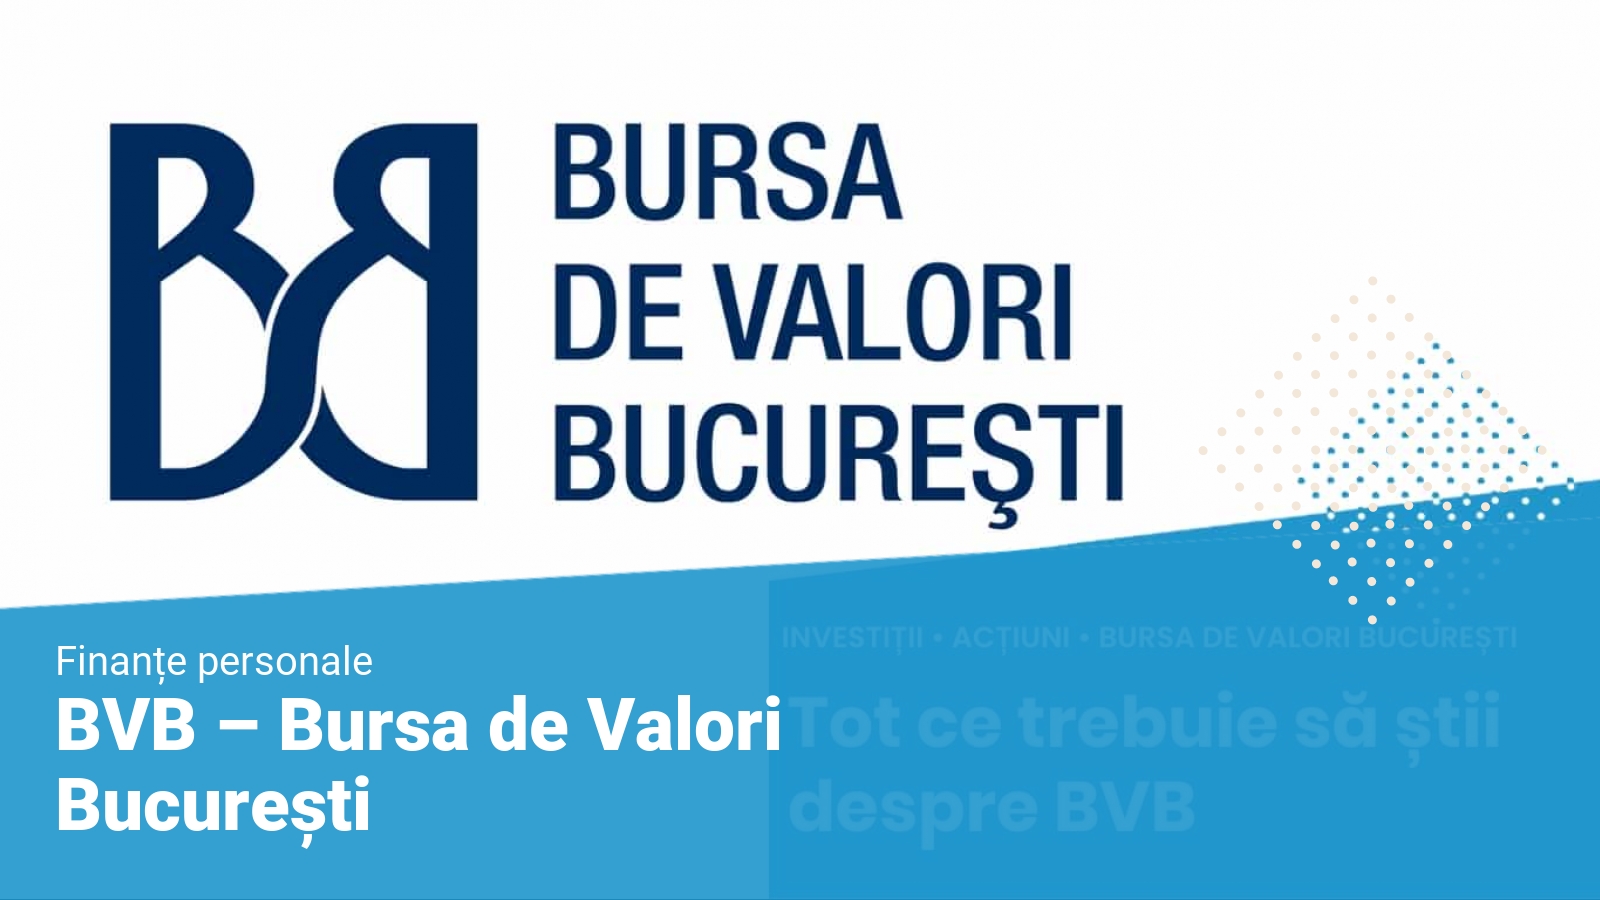 Bucharest Stock Exchange BVB financing through capital market